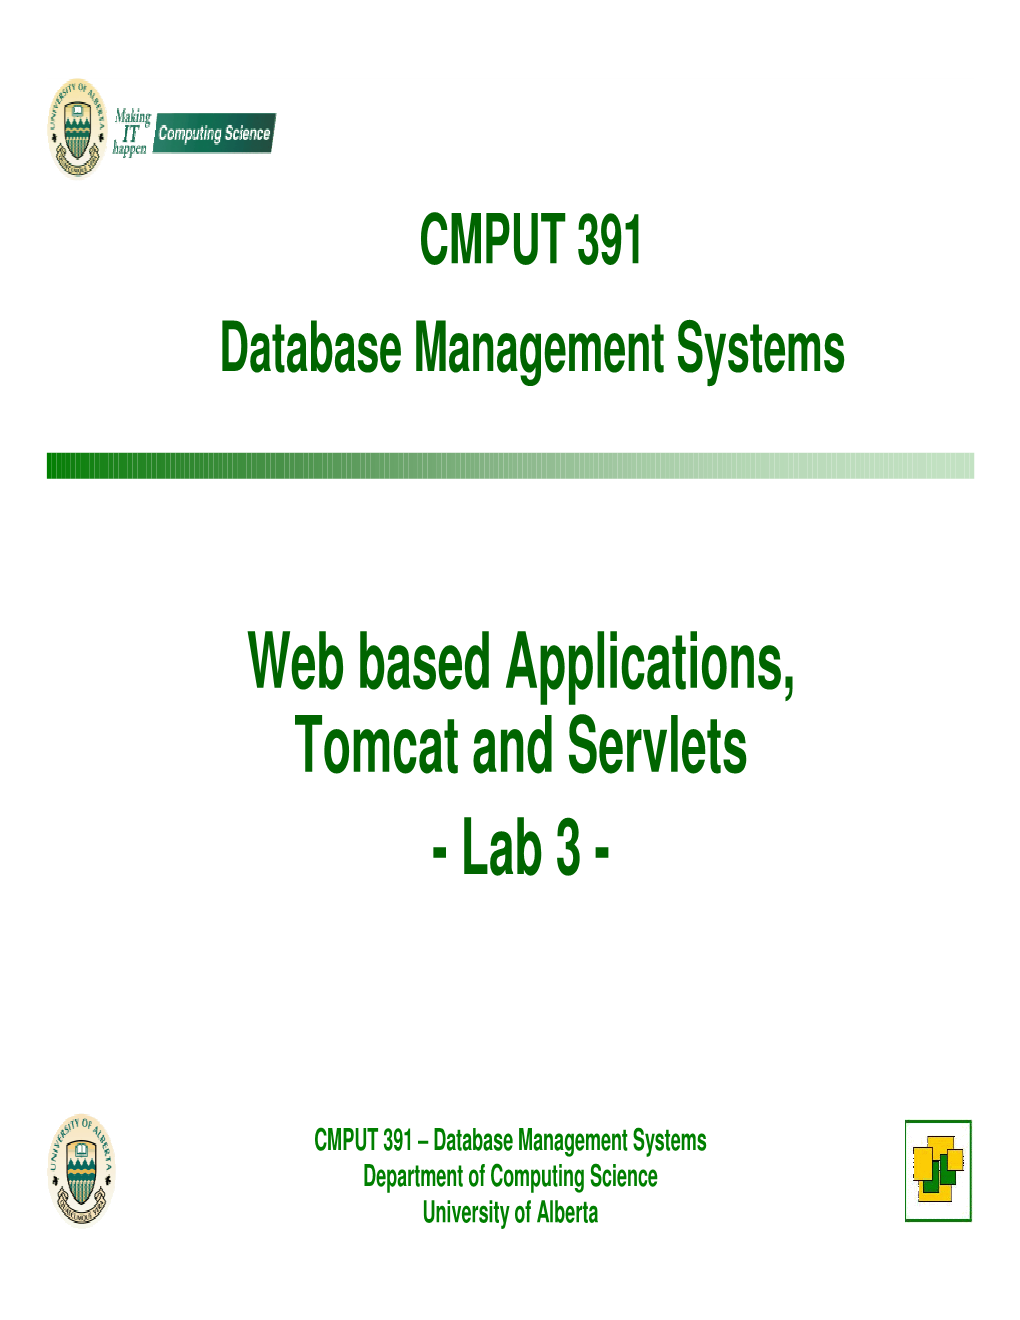 Web Based Applications, Tomcat and Servlets - Lab 3